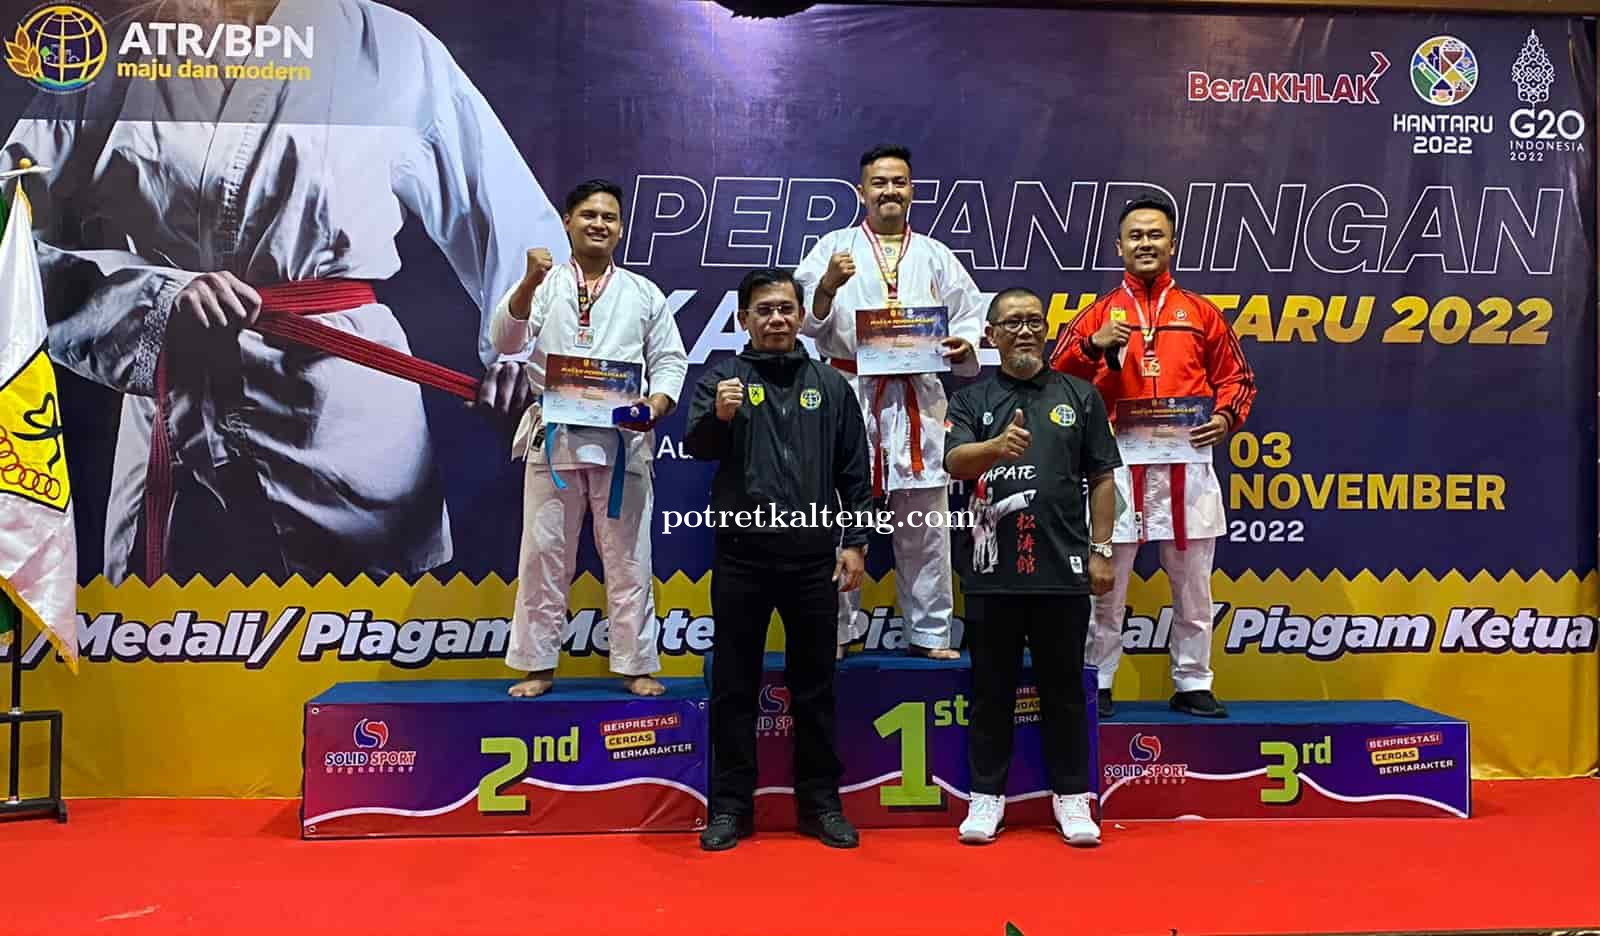 Membanggakan! Perwakilan BPN Kota Palangka Raya Raih Juara 3 Karate Dalam Kejuaraan Nasional